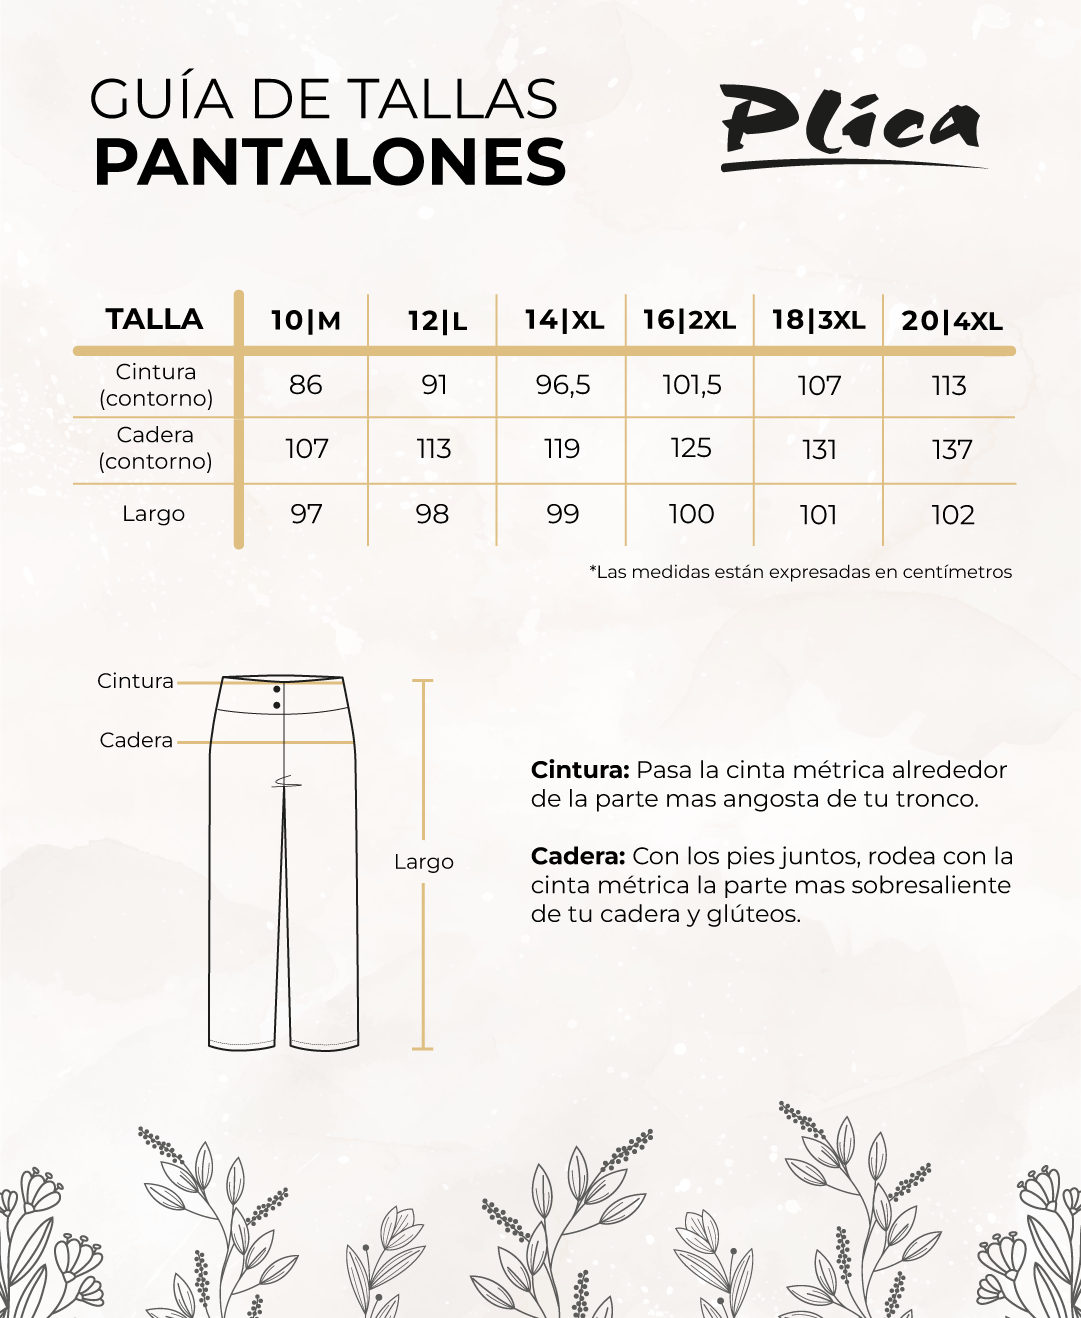 Pantalones - Plica